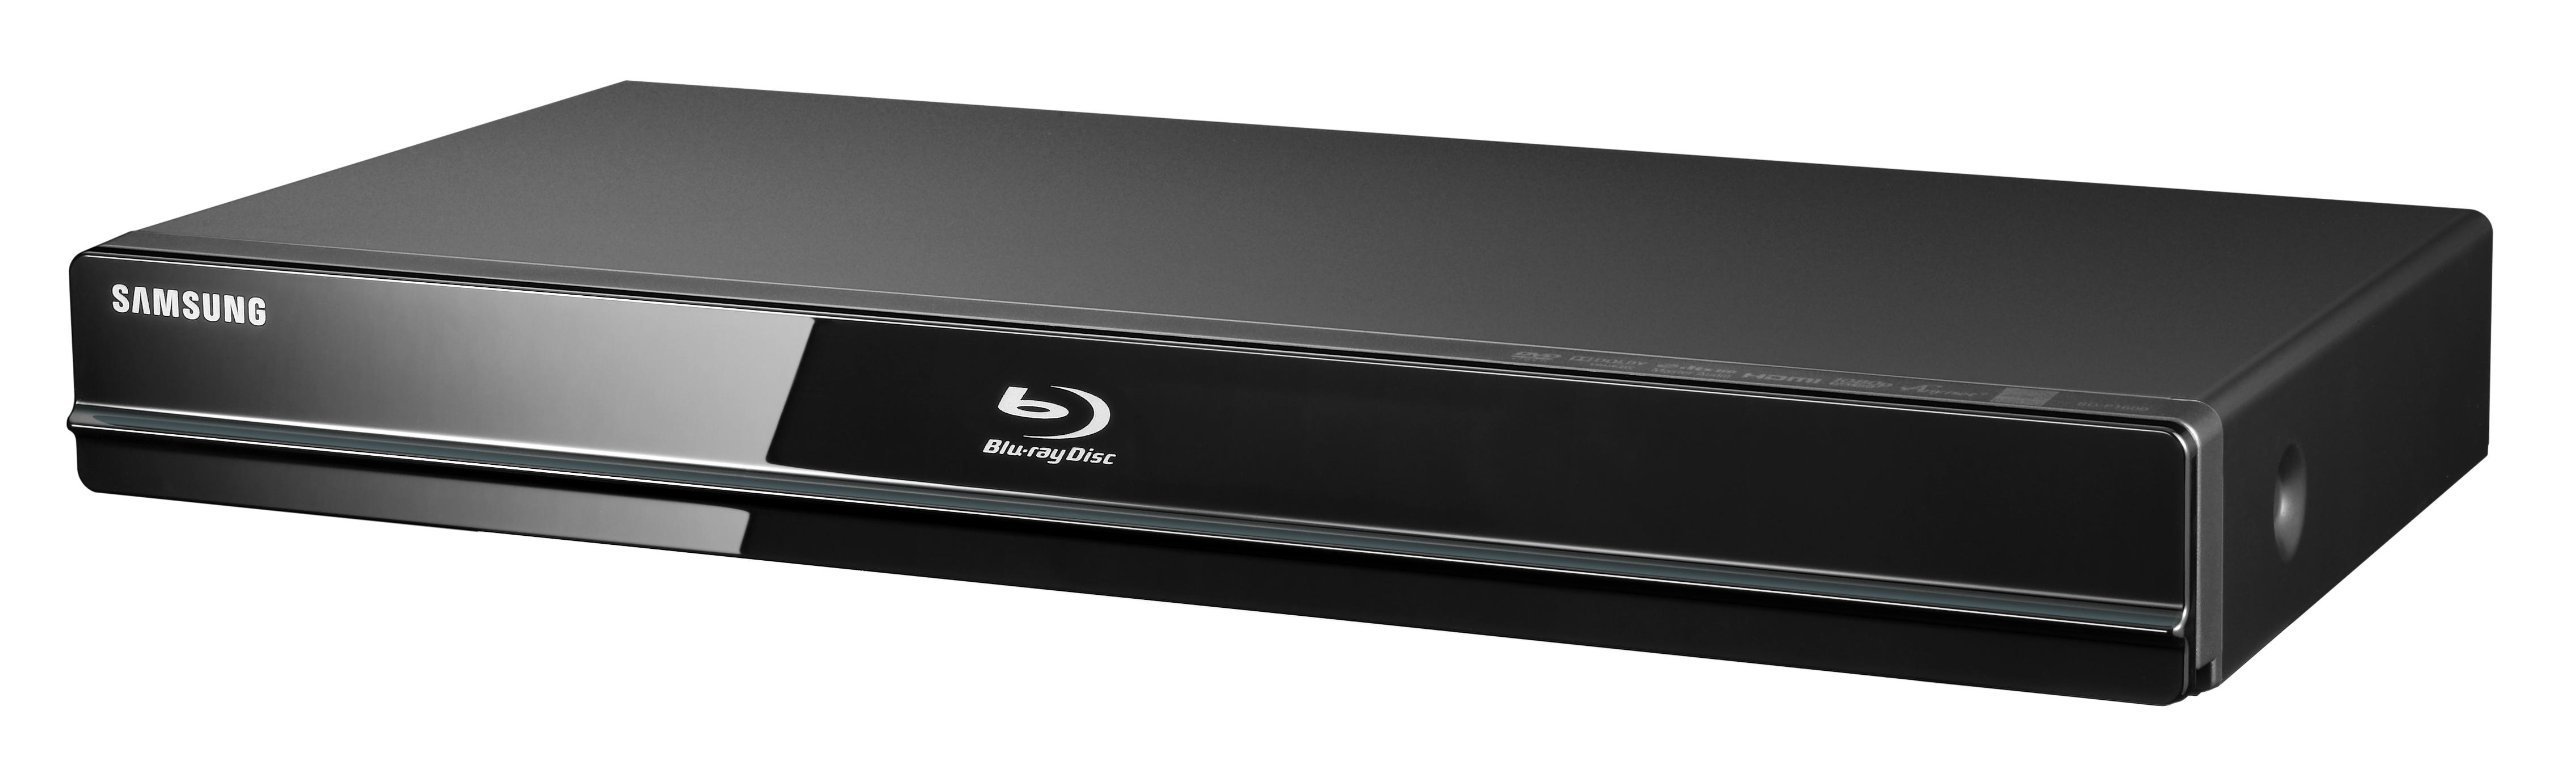 Samsung BD-P1600 1080p Blu-ray Disc Player (2009 Model)